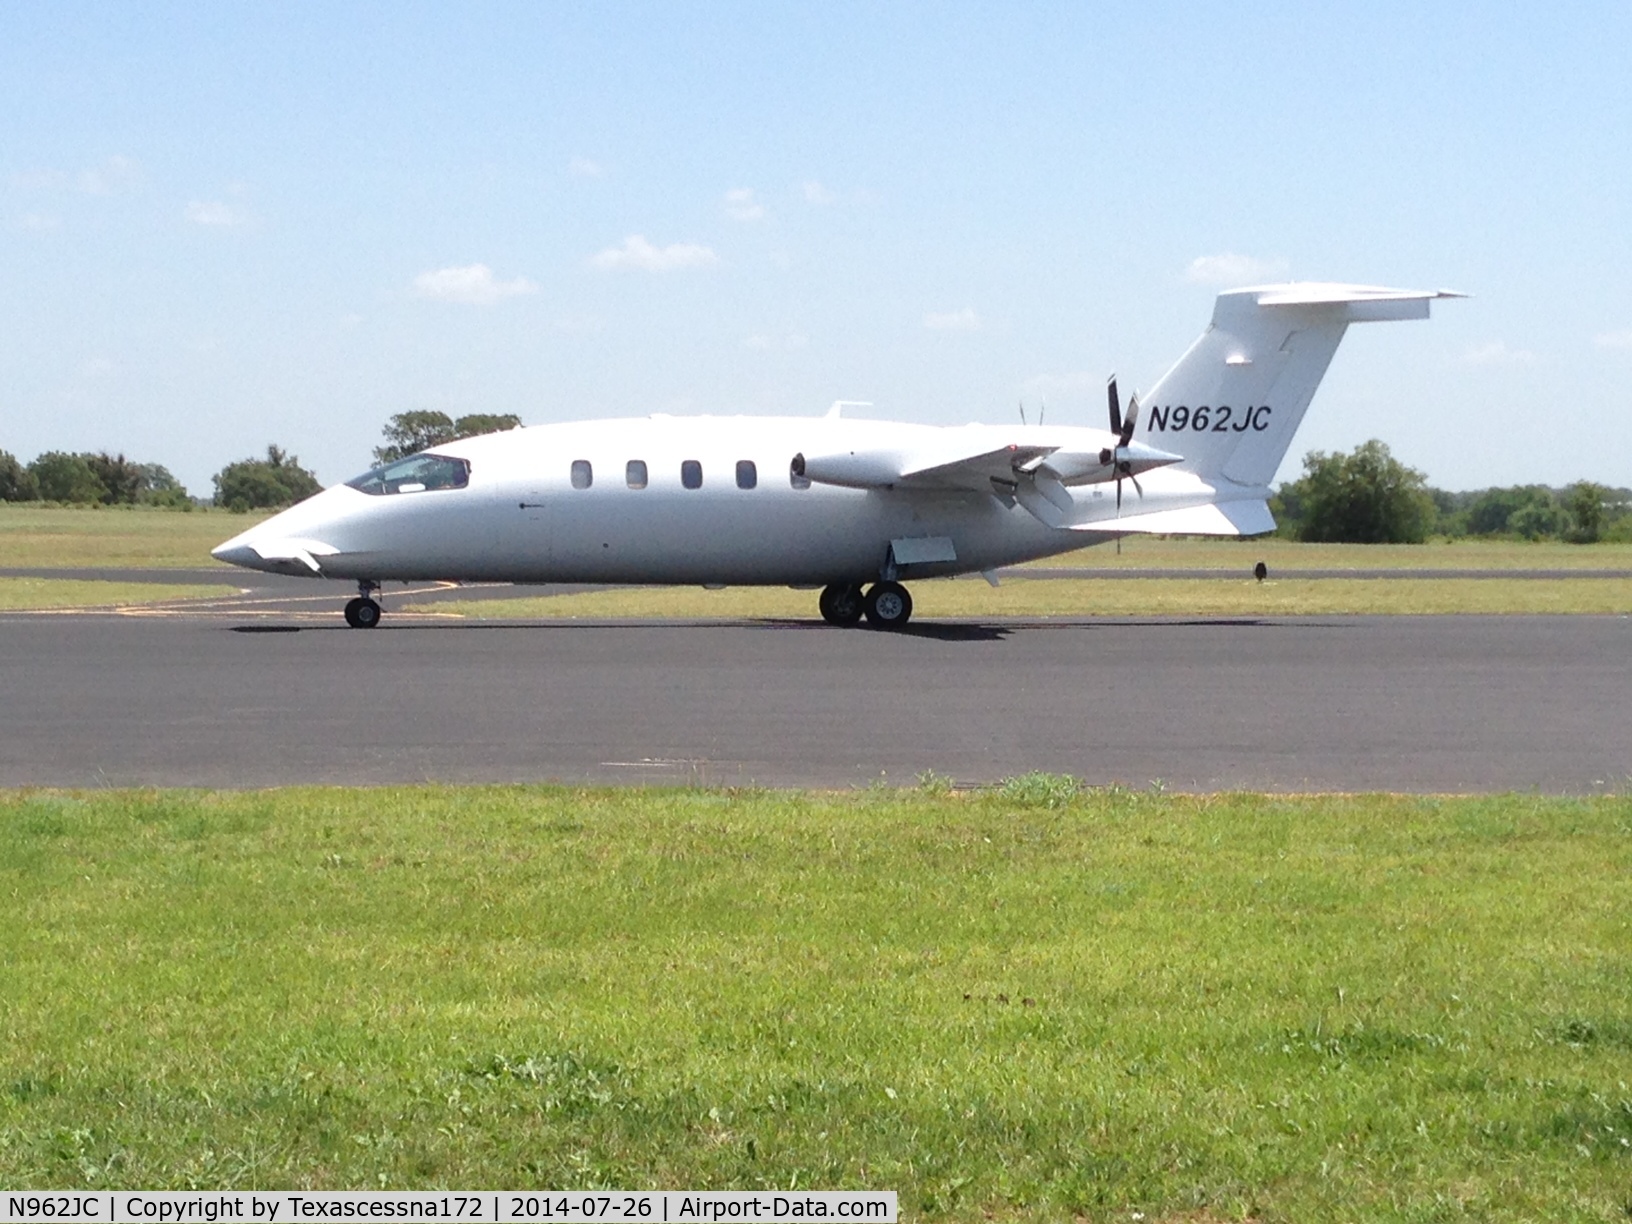 N962JC, 2002 Piaggio P-180 C/N 1062, Photo taken at Stephenville, Texas on July 26, 2014. Landed on 4209'X75' runway.